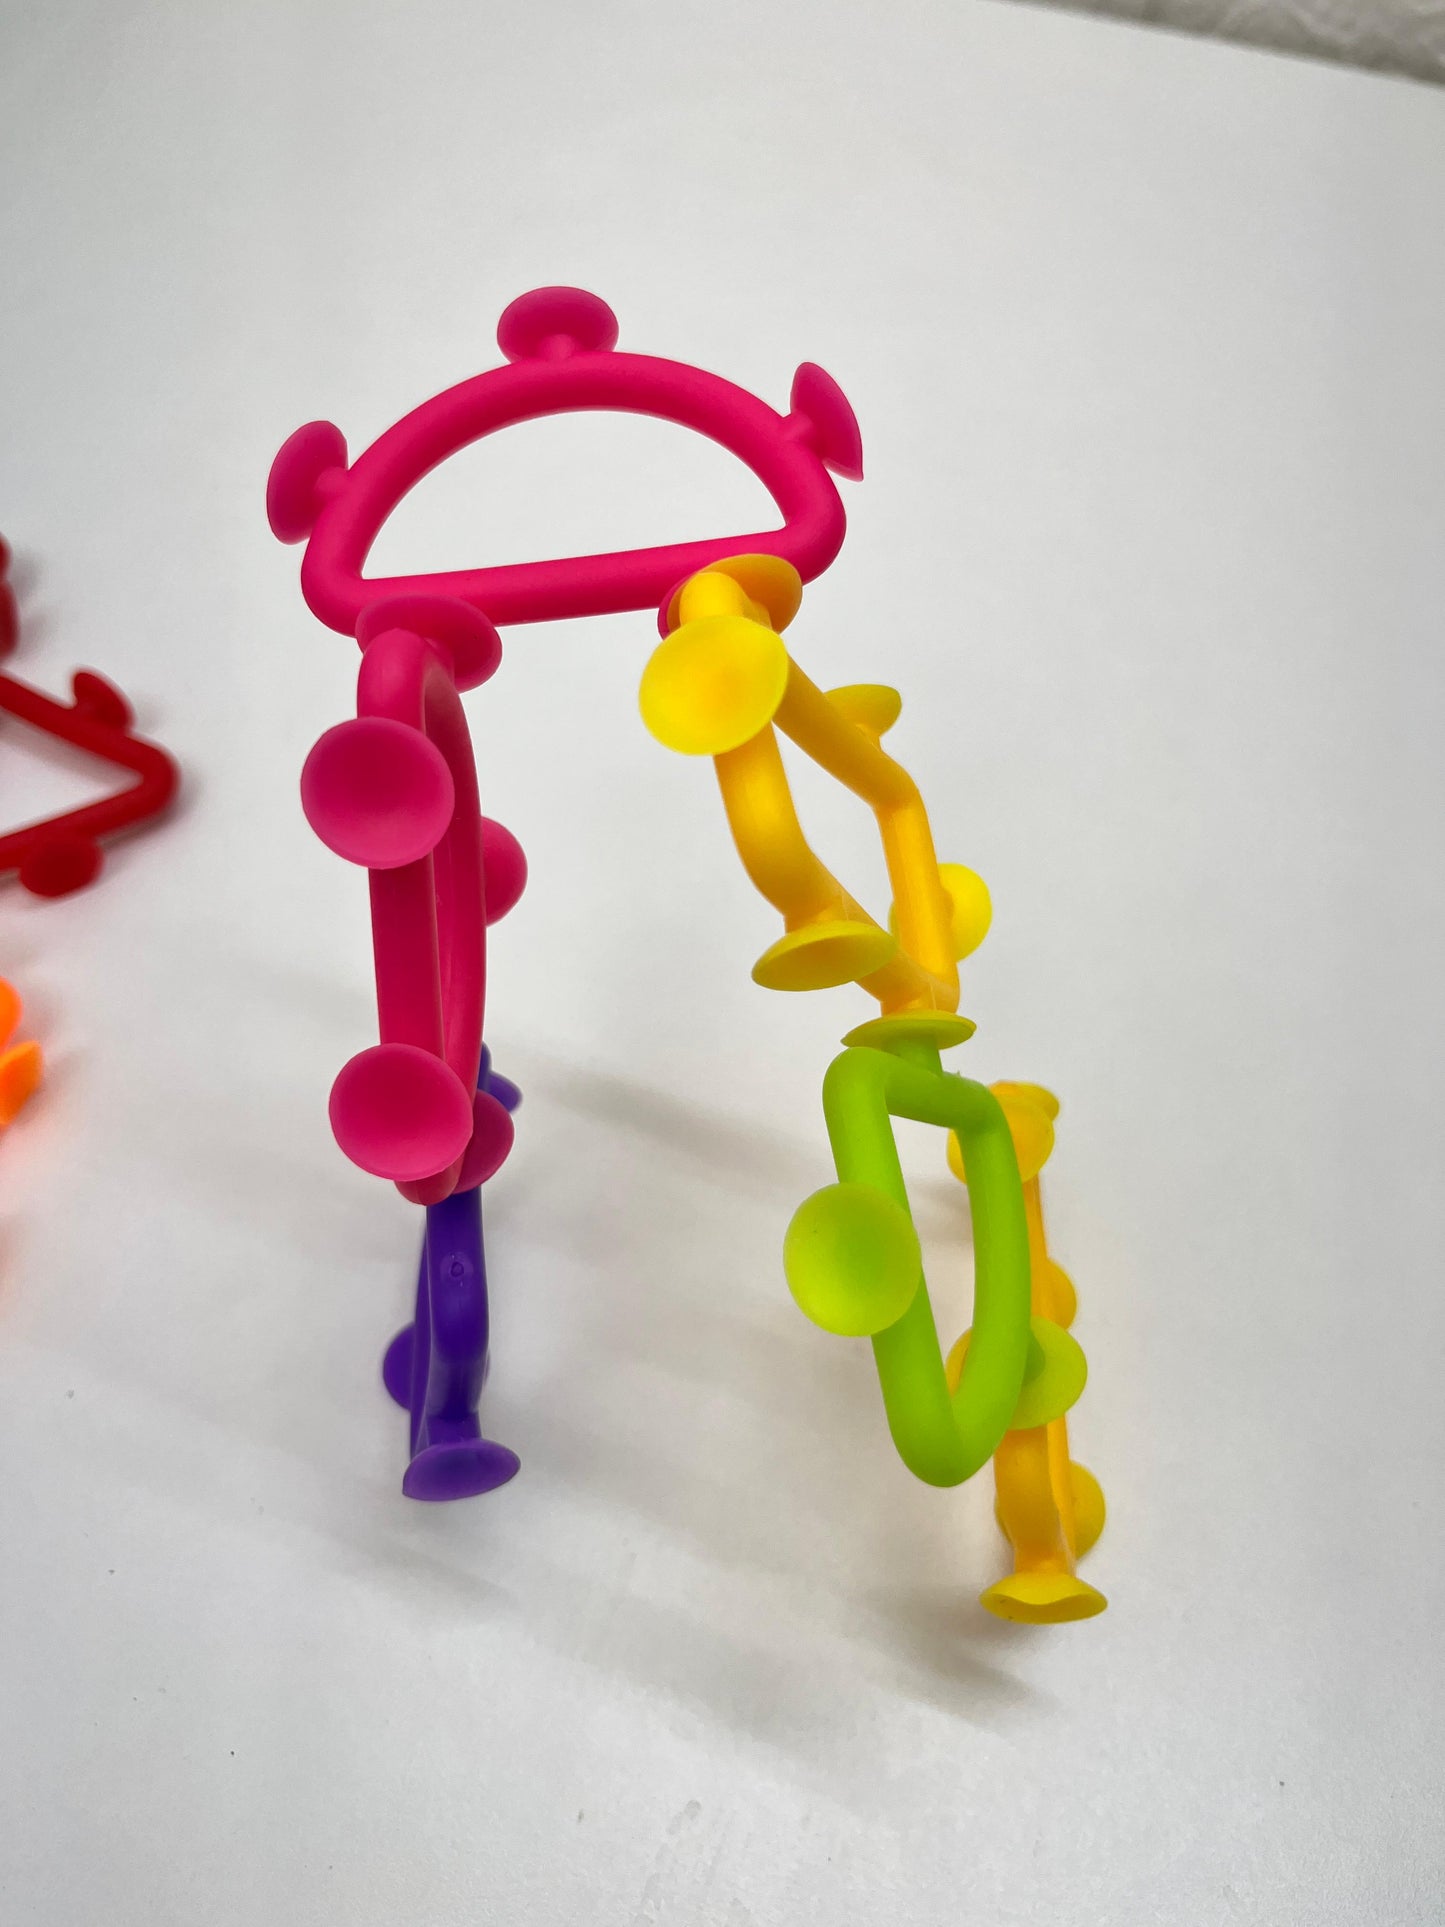 Suction Cup DIY Construction Puzzles Fun Bath/Travel Montessori Sensory Toys